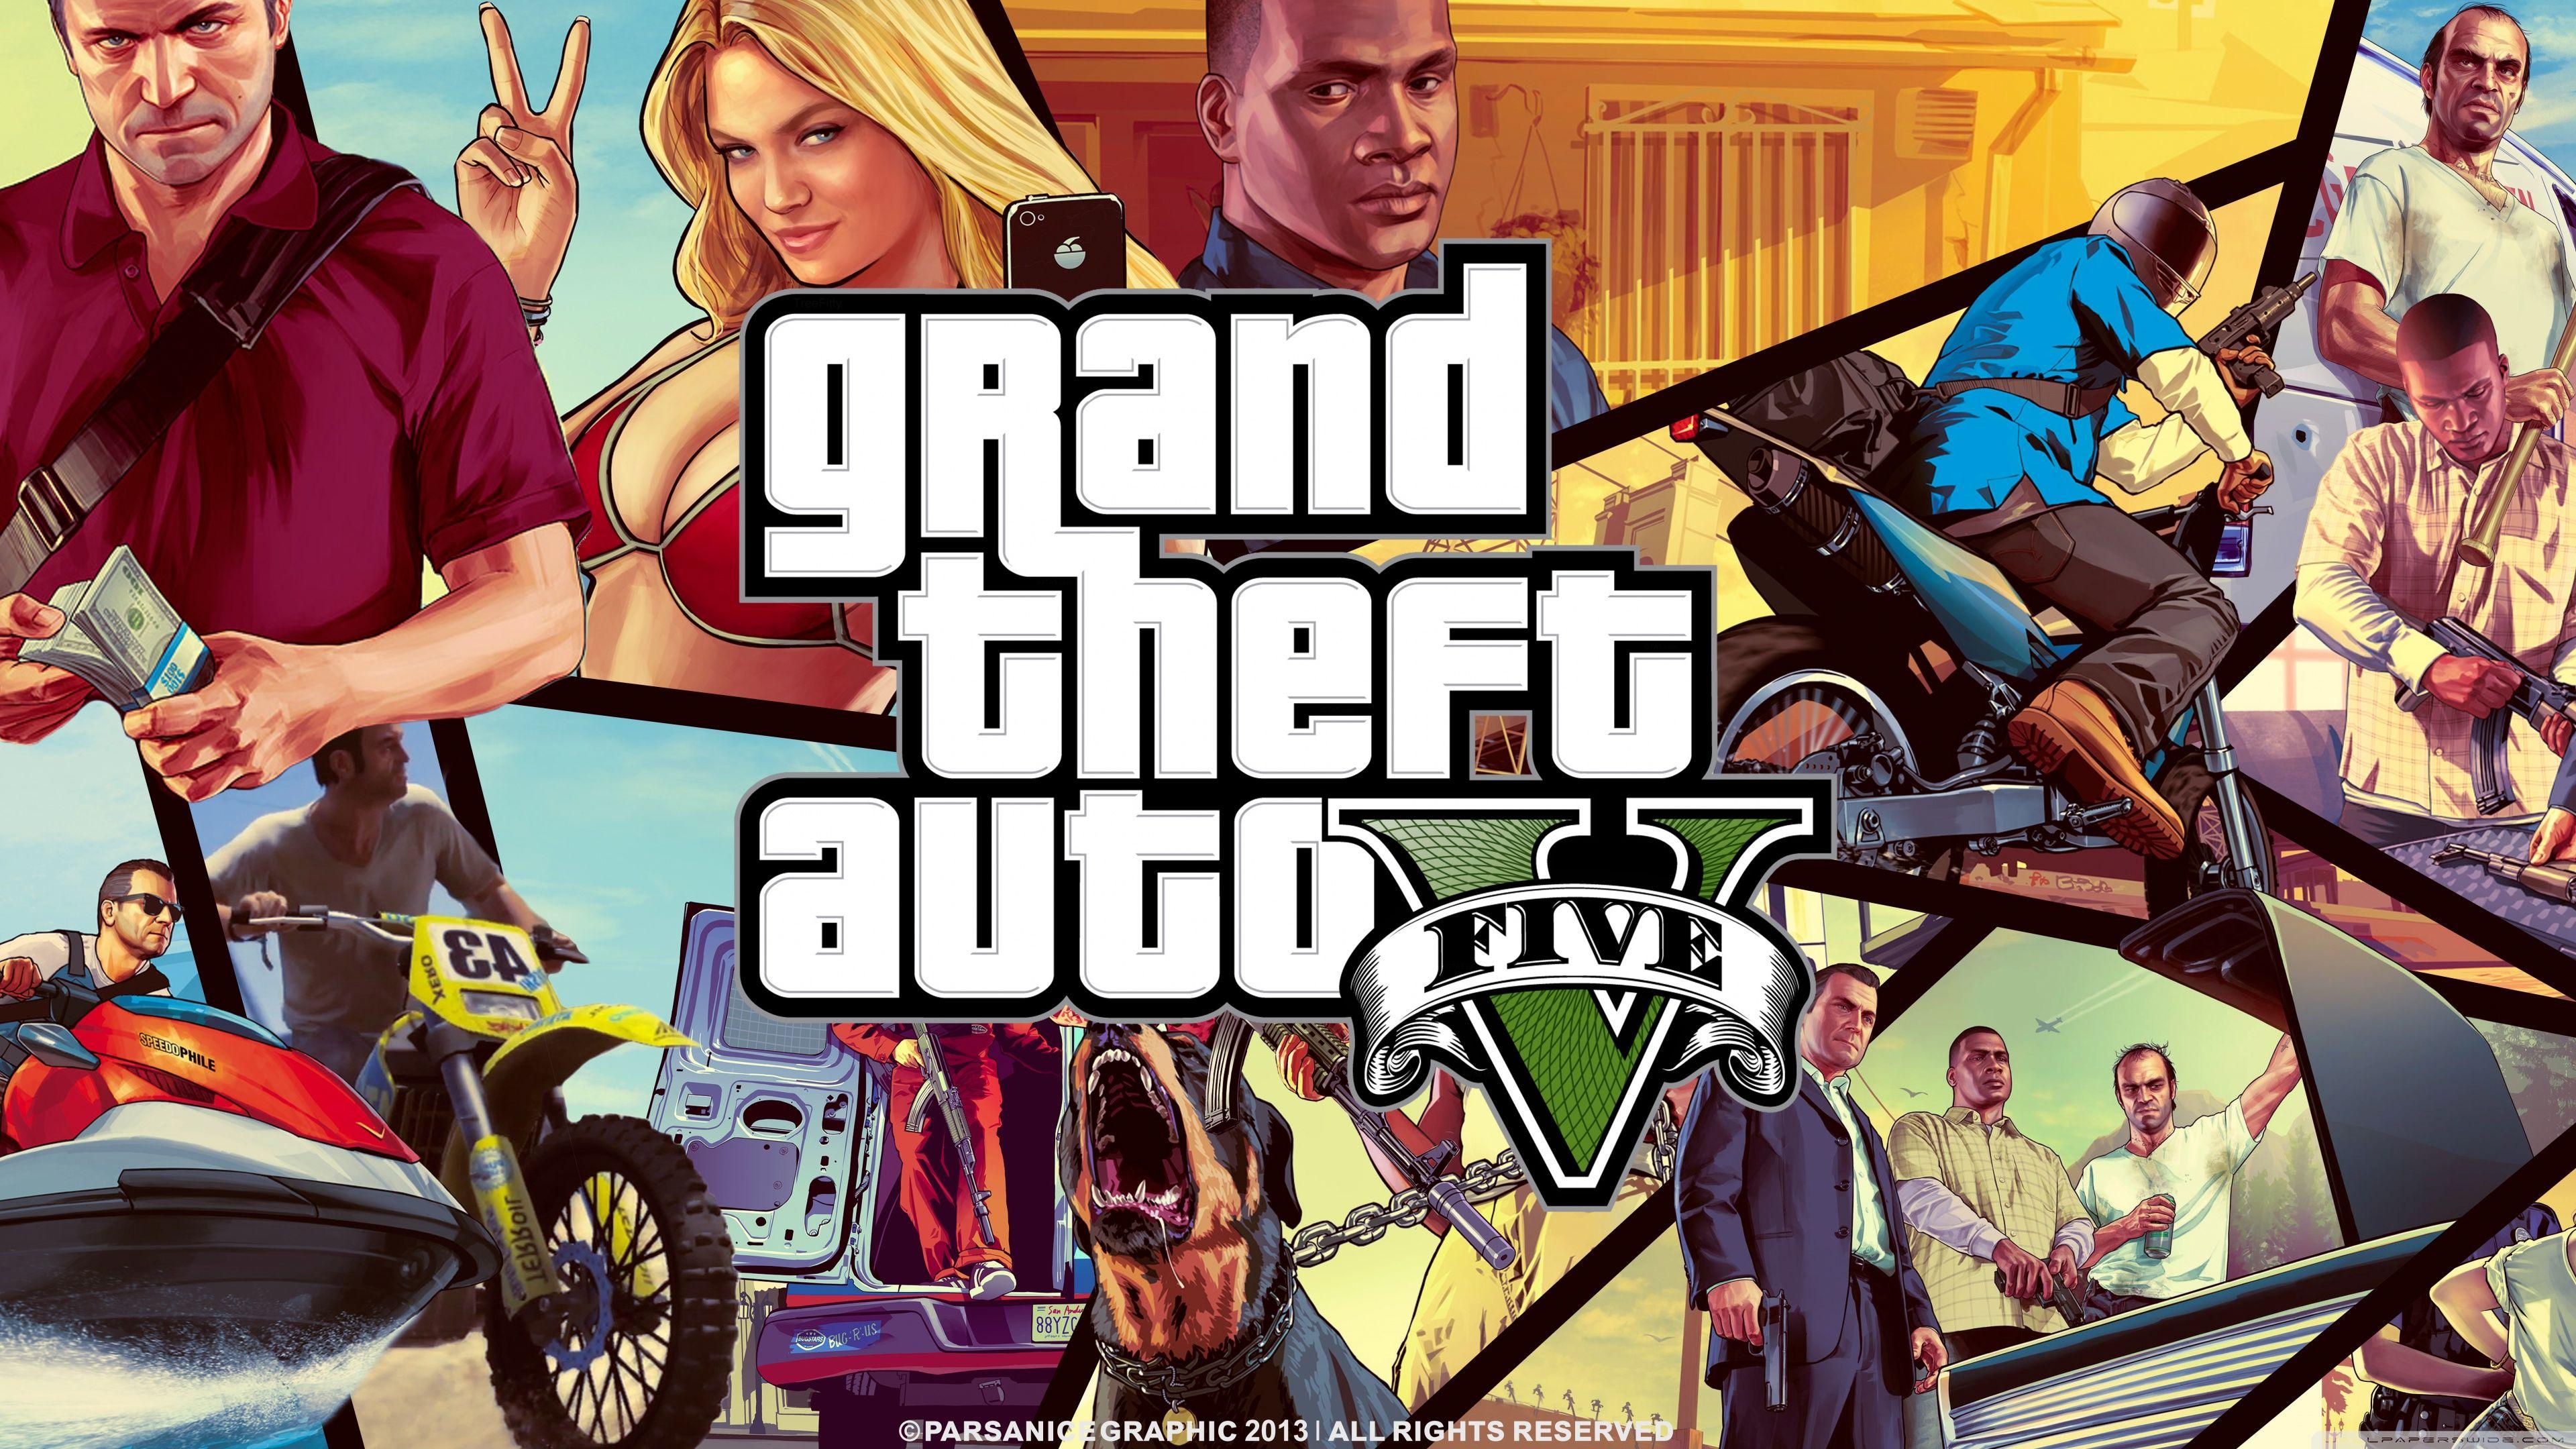 Grand Theft Auto V HD desktop wallpaper, High Definition